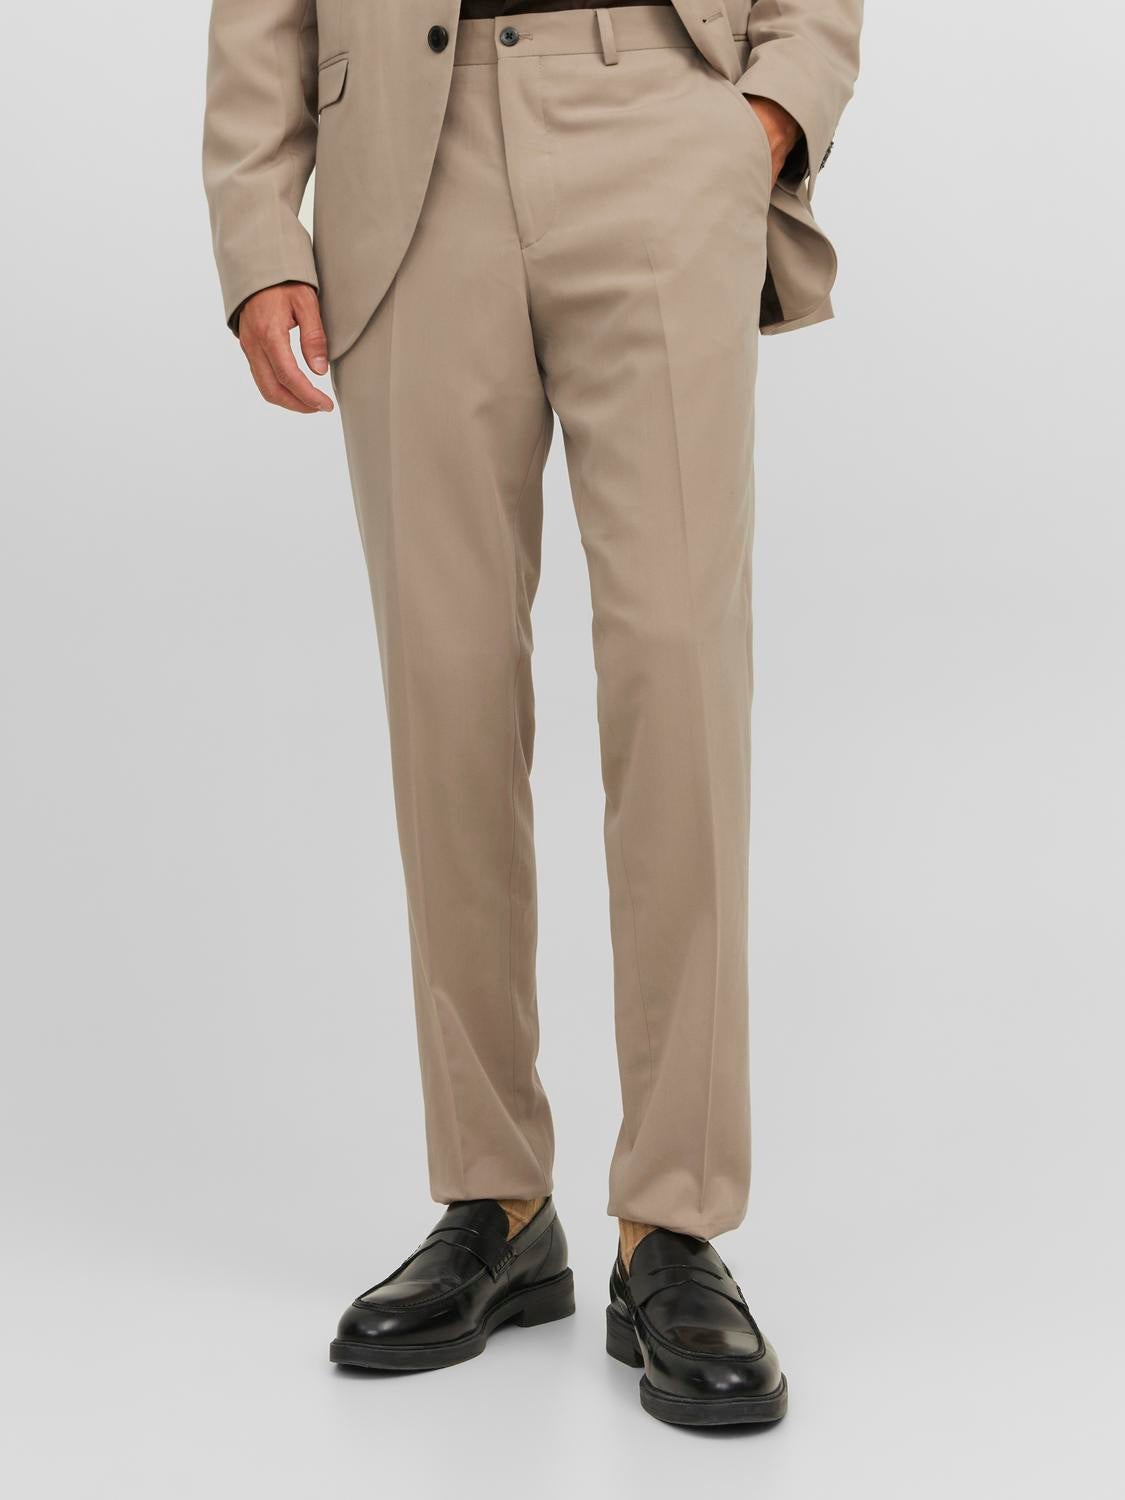 Buy MANCREW Formal Pants for Men  Formal Pants for Men Combo  Cream Beige  Combo at Amazonin